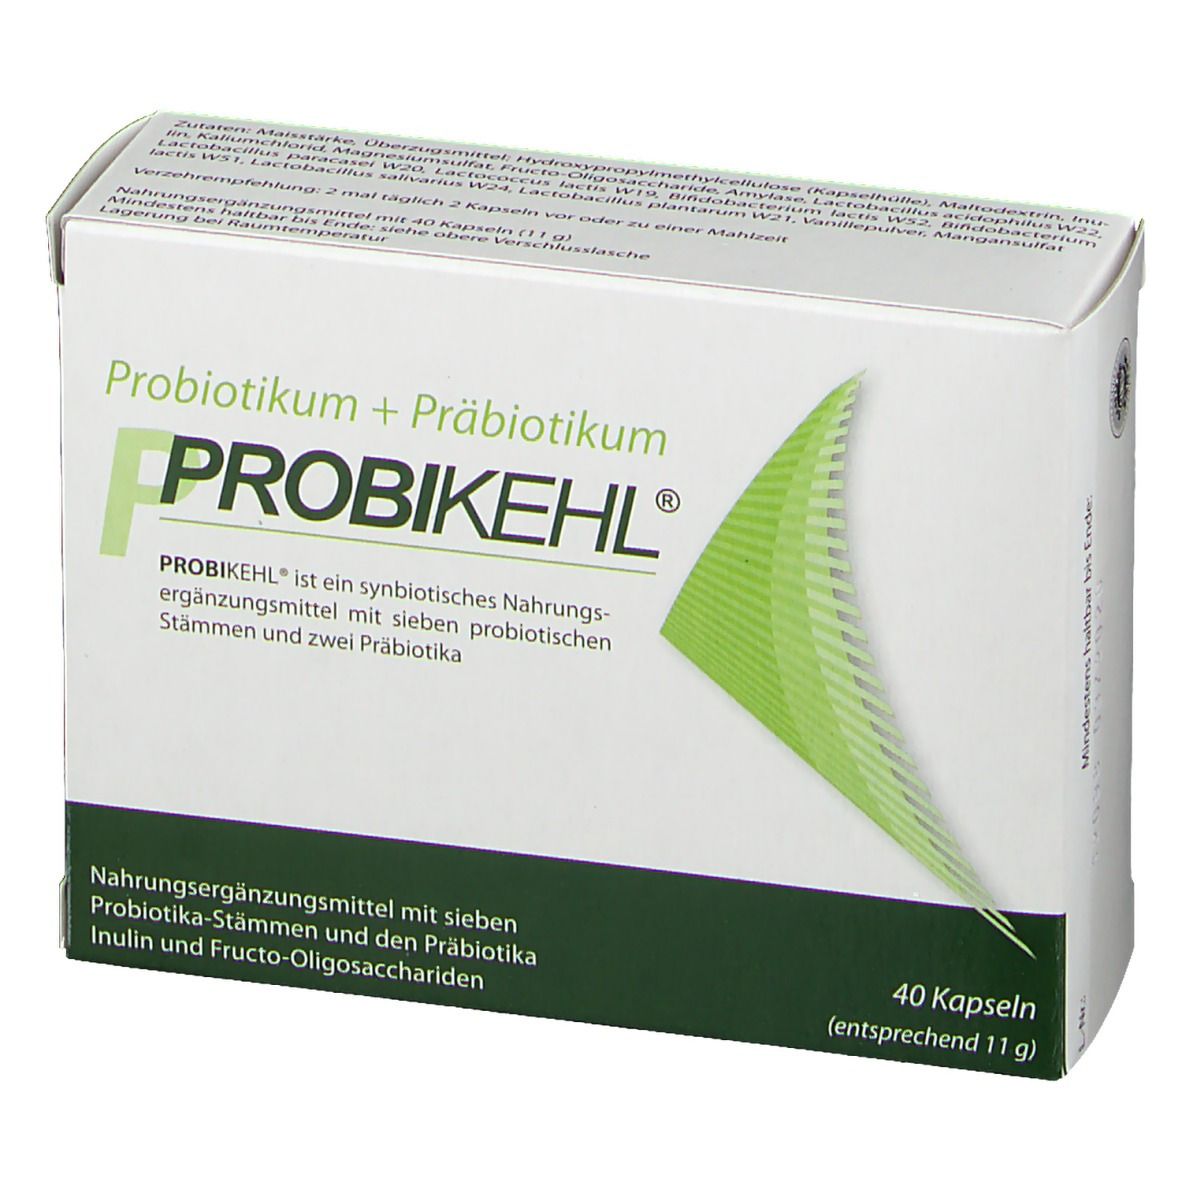 Probikehl®